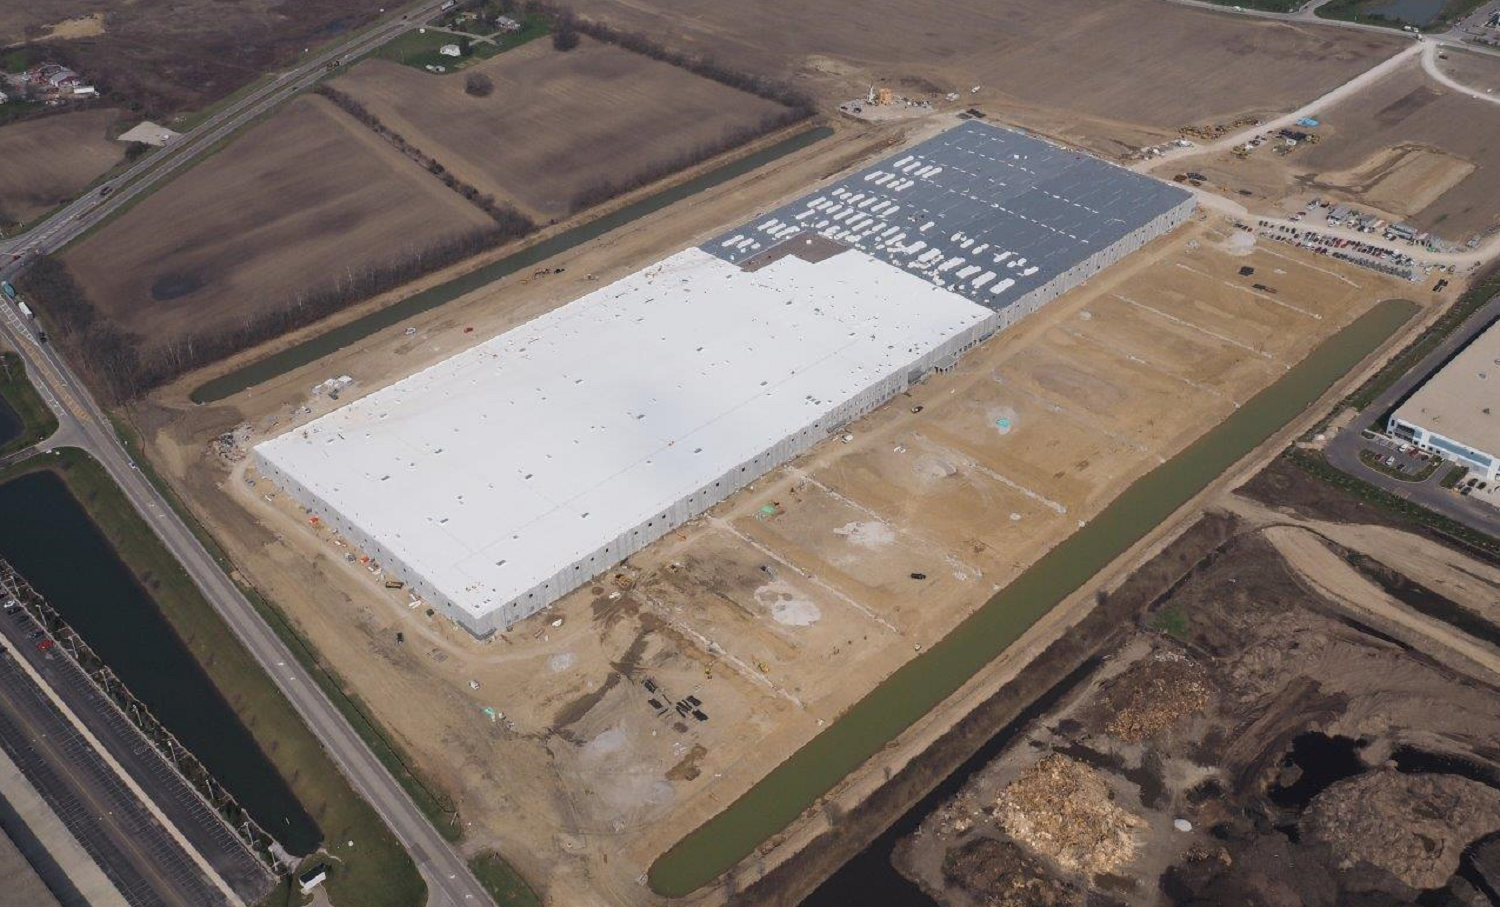 One million sq ft Distribution Center - Obetz, OH